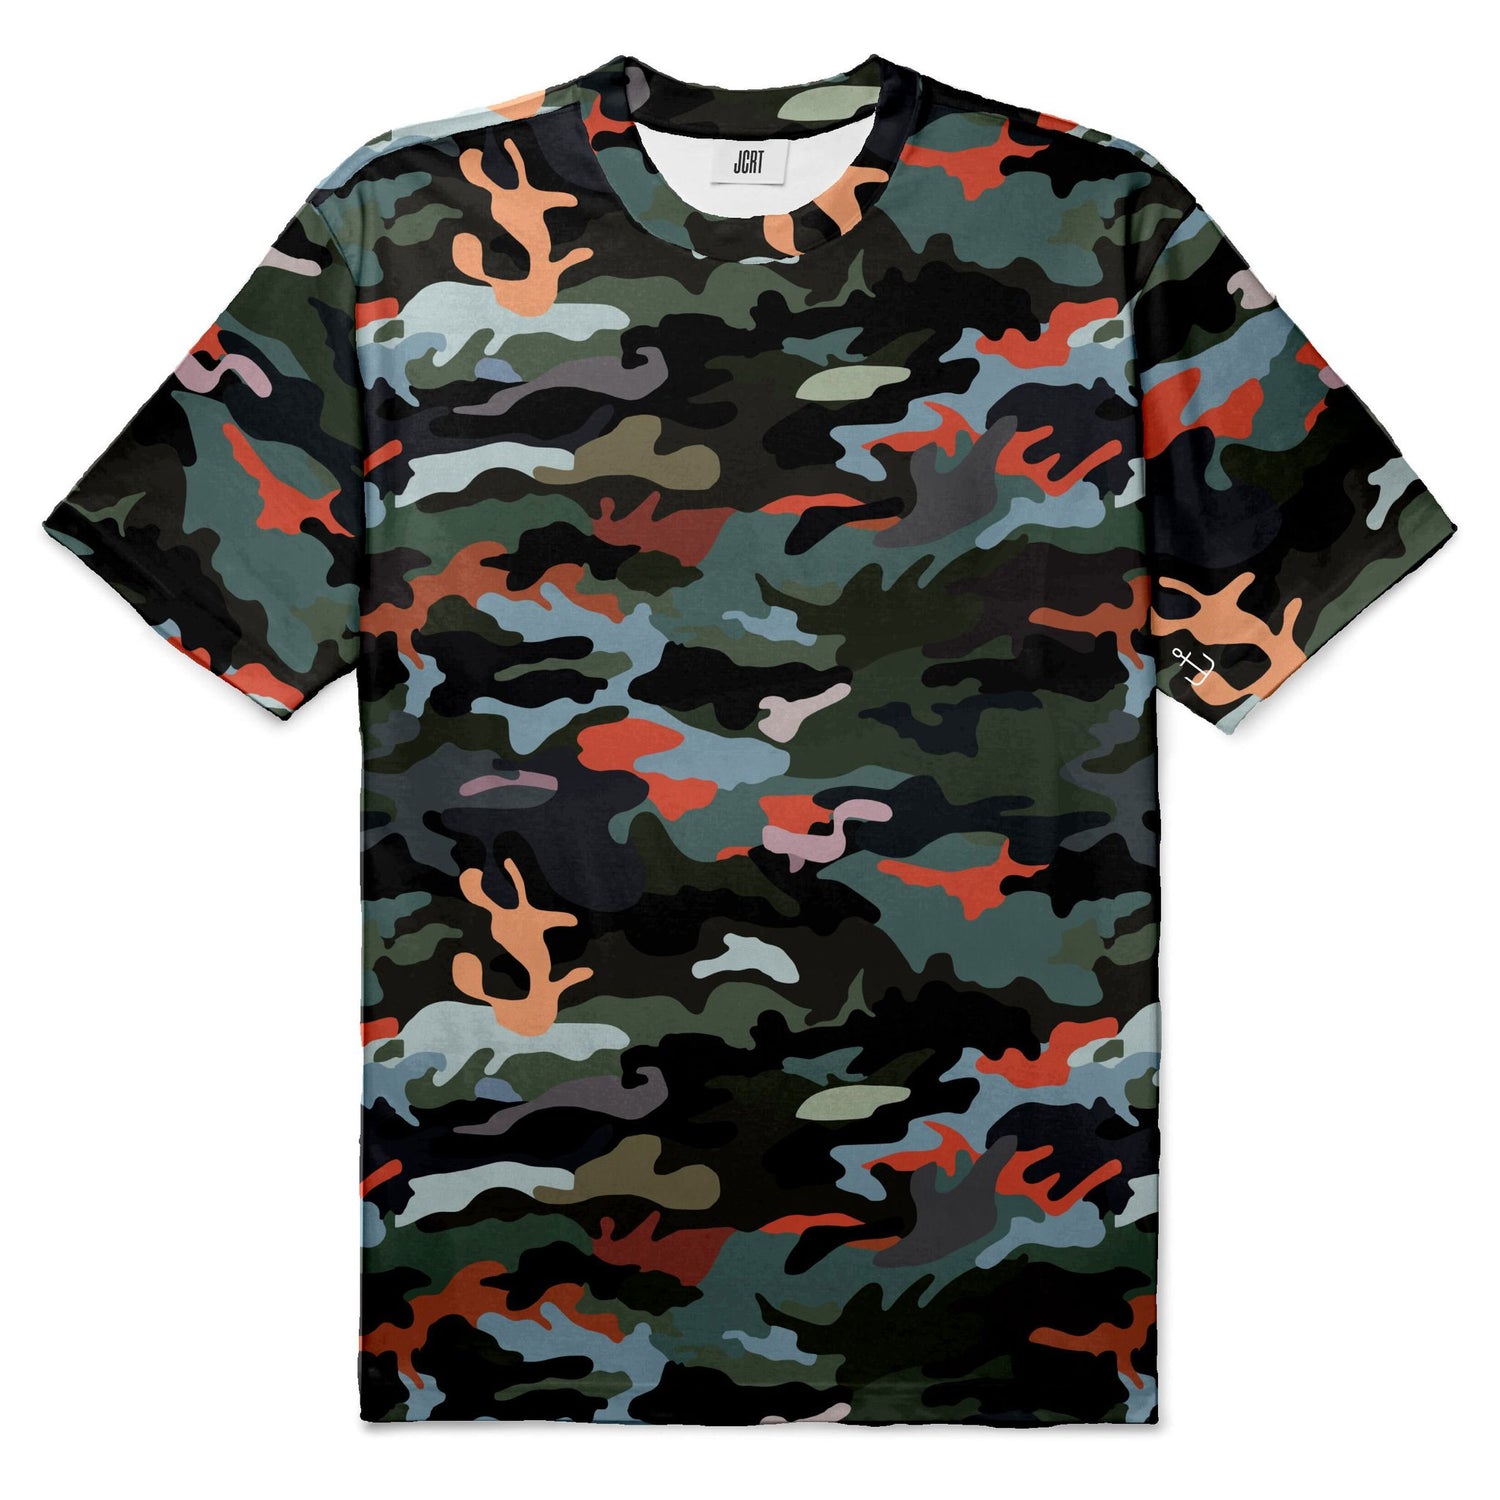 The Disintegration Camouflage T-Shirt